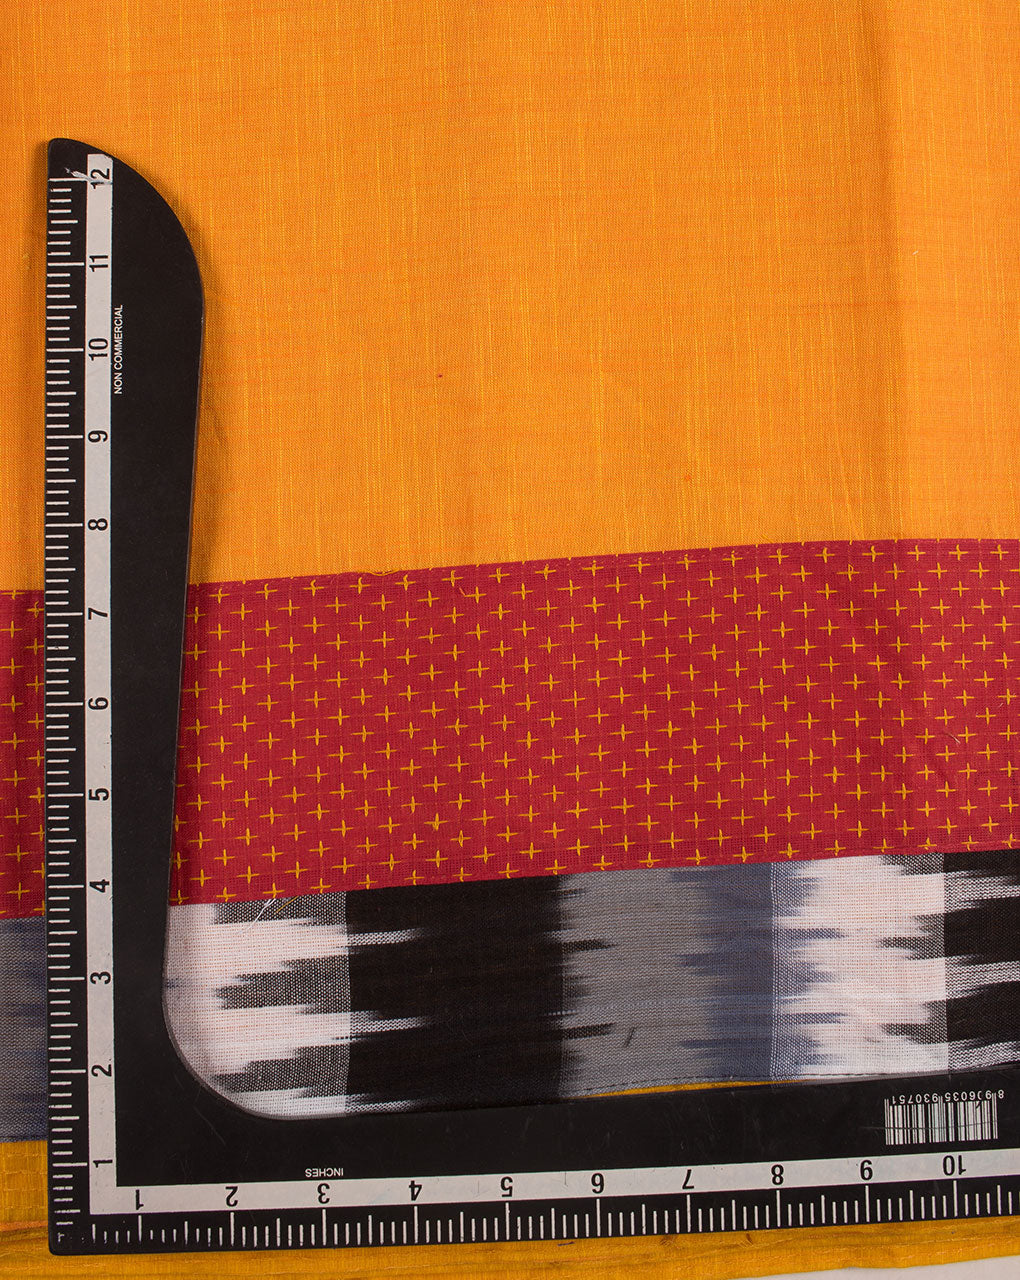 Orange Plain Woven Loom Textured Cotton Fabric - Fabriclore.com